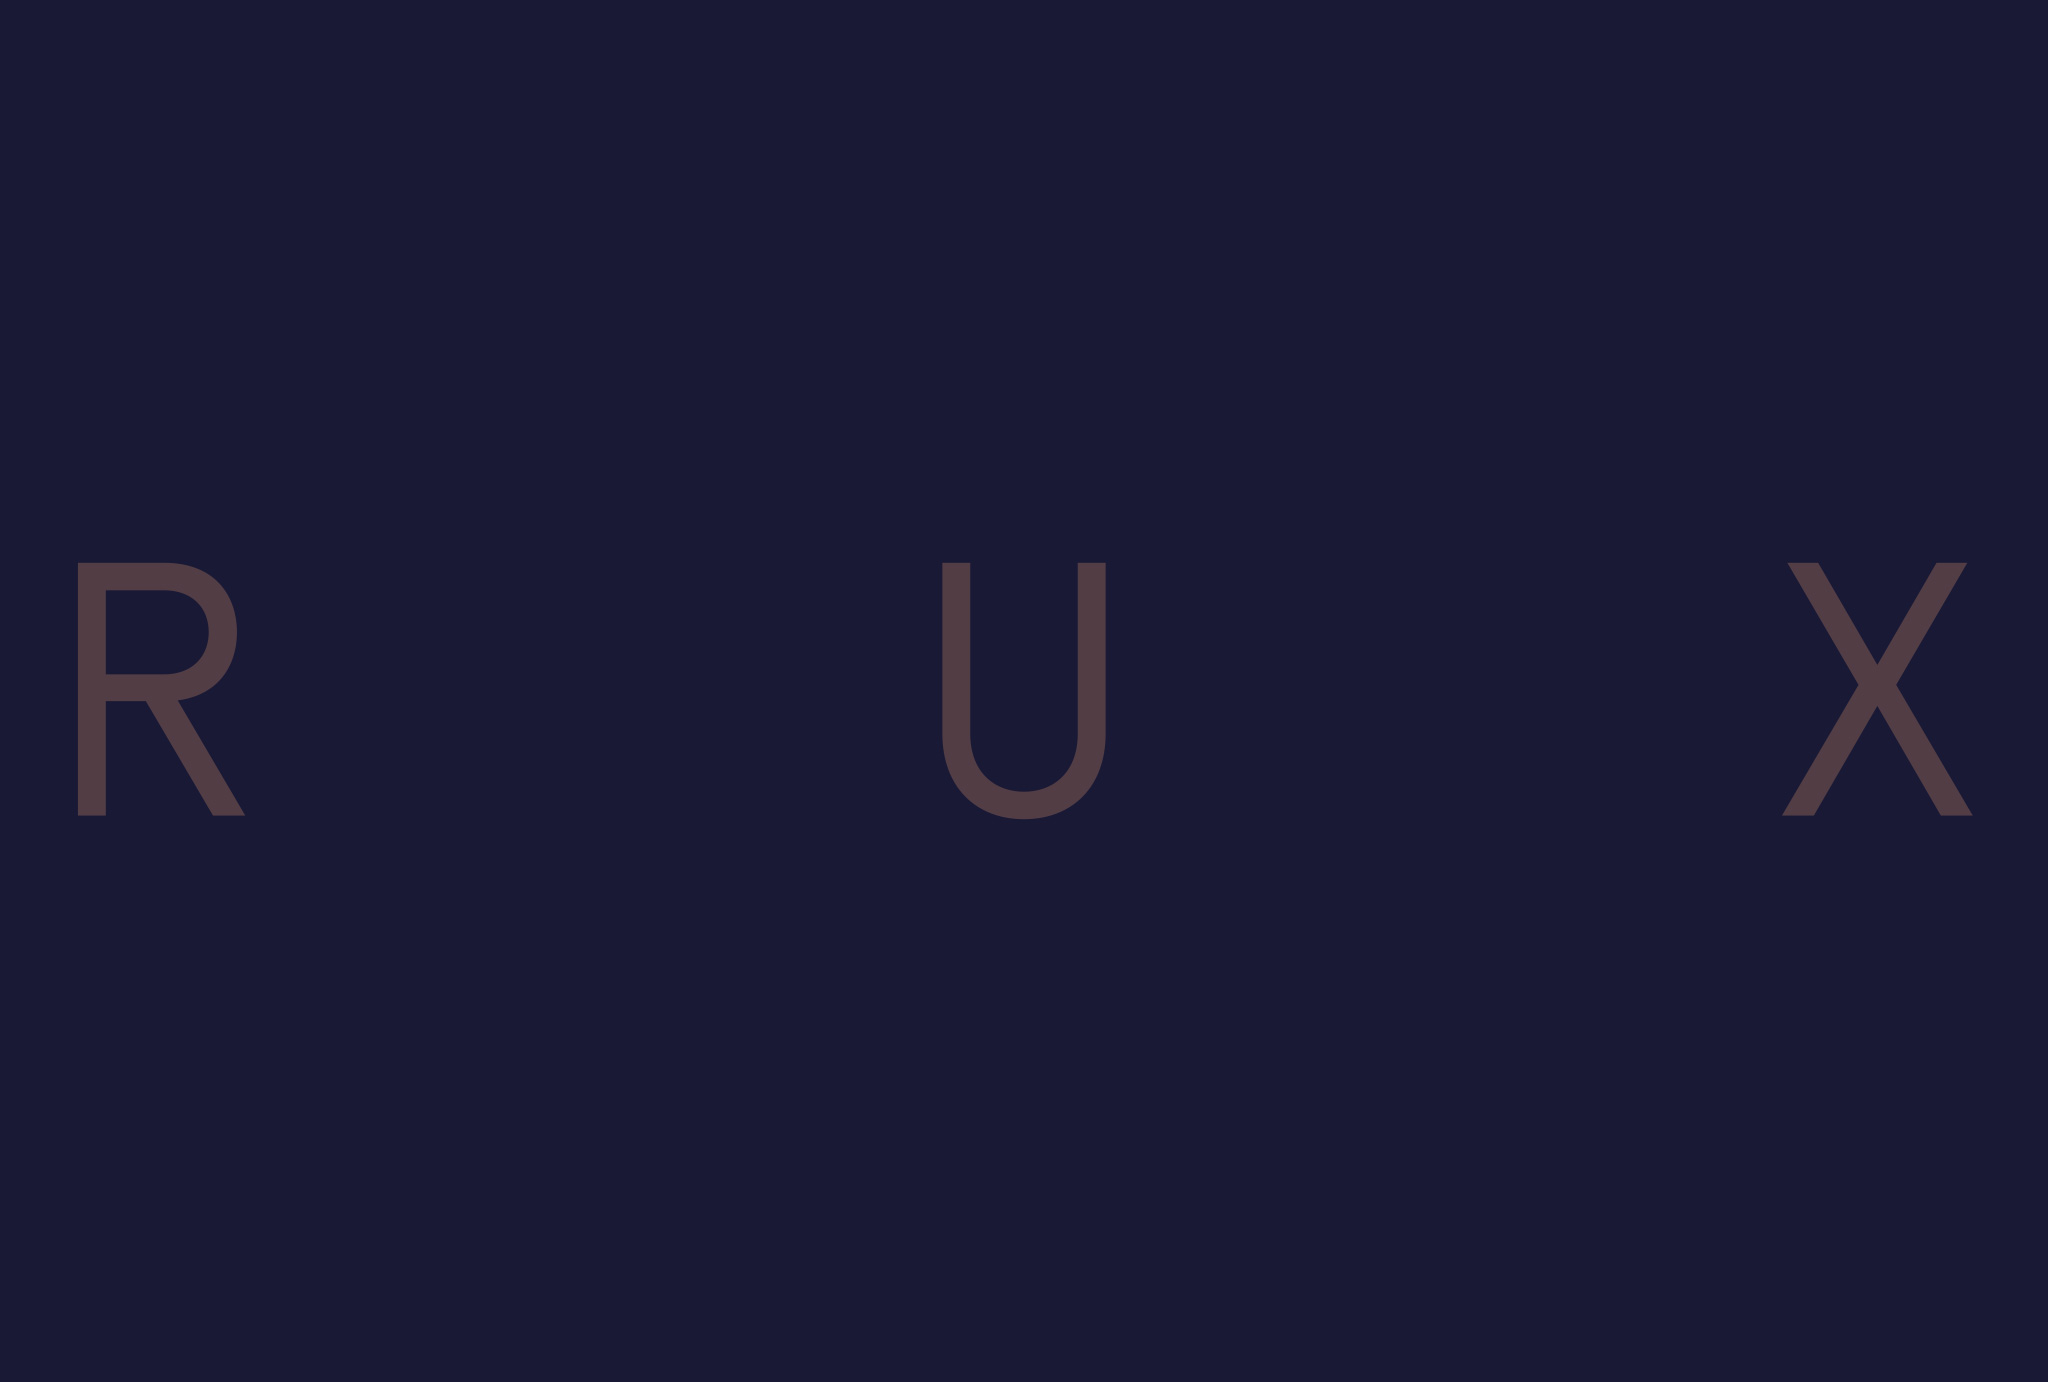 ‘RUX’ written in copper on a dark blue background